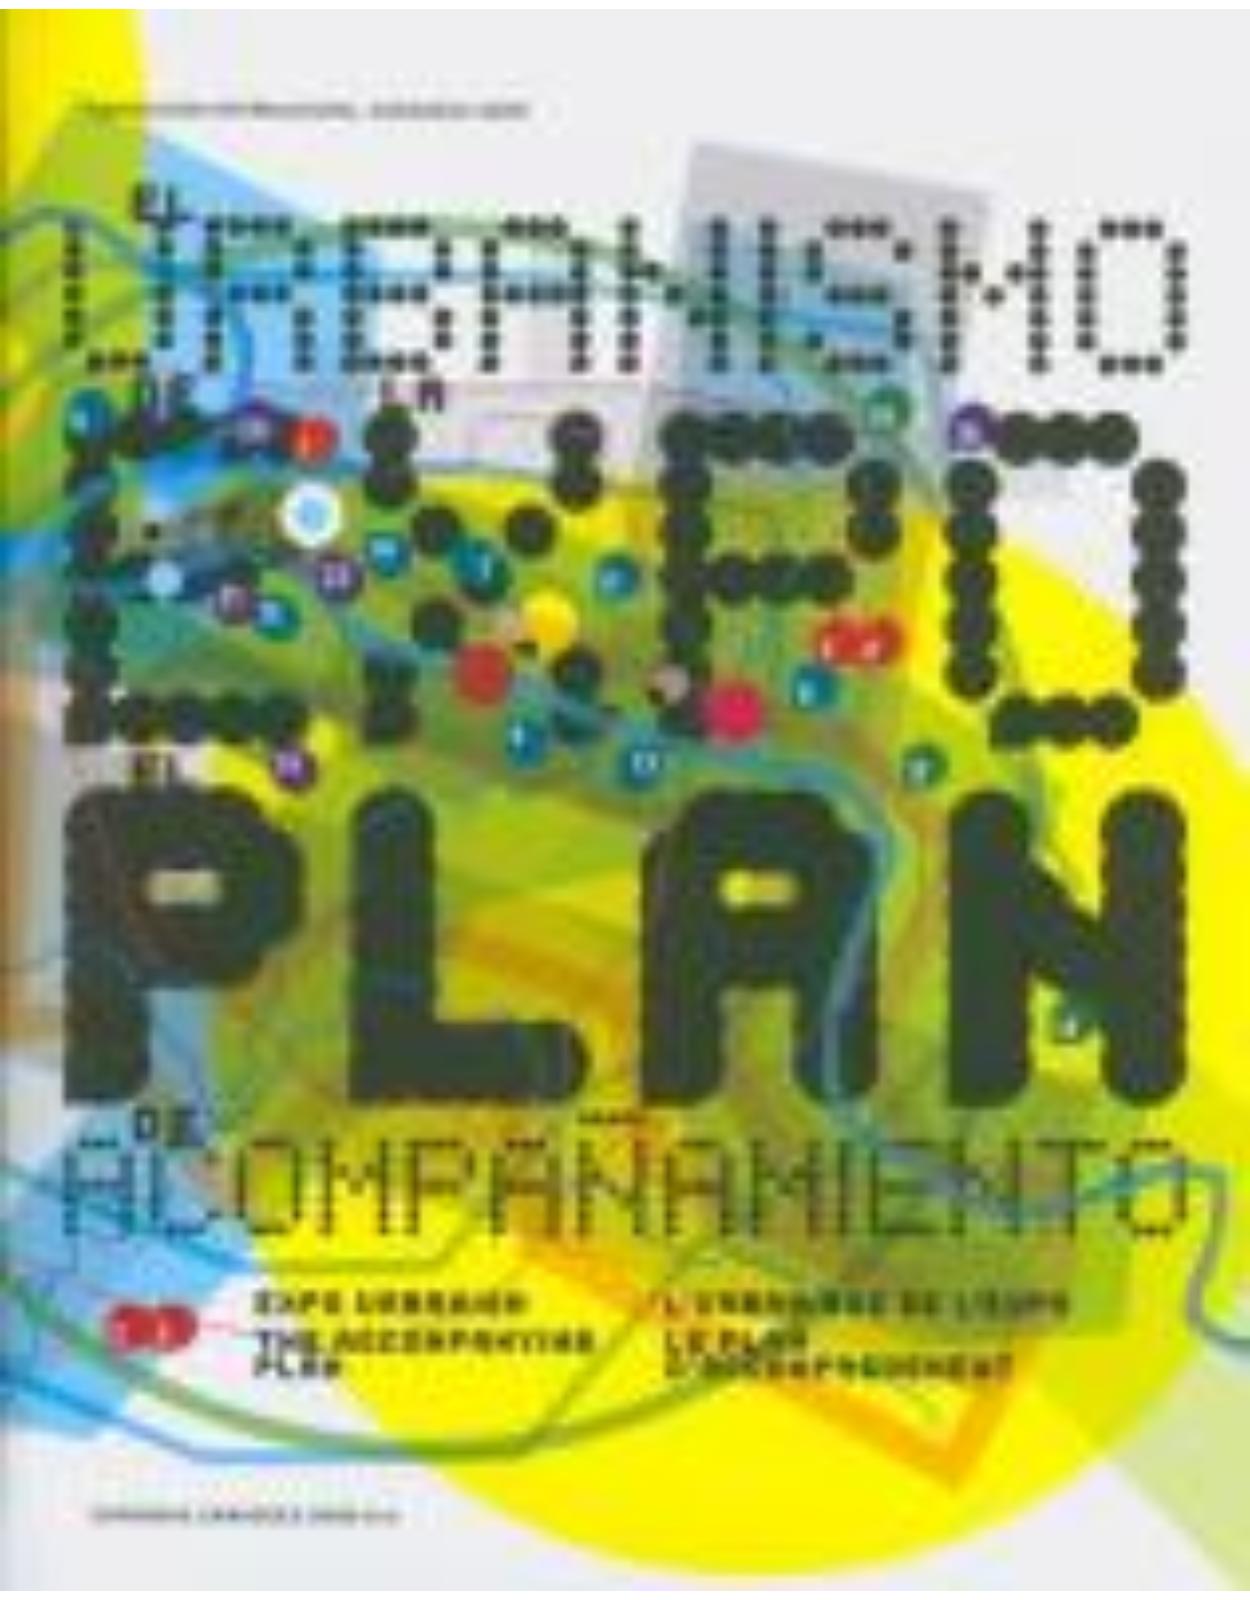 Urbanismo de la Expo: Plan de Acompanamiento/Expo Urbanism: The Accompanying Plan/L'Urbanishe de L'Expo: Le Plan D'Accompagnement illustrated edition